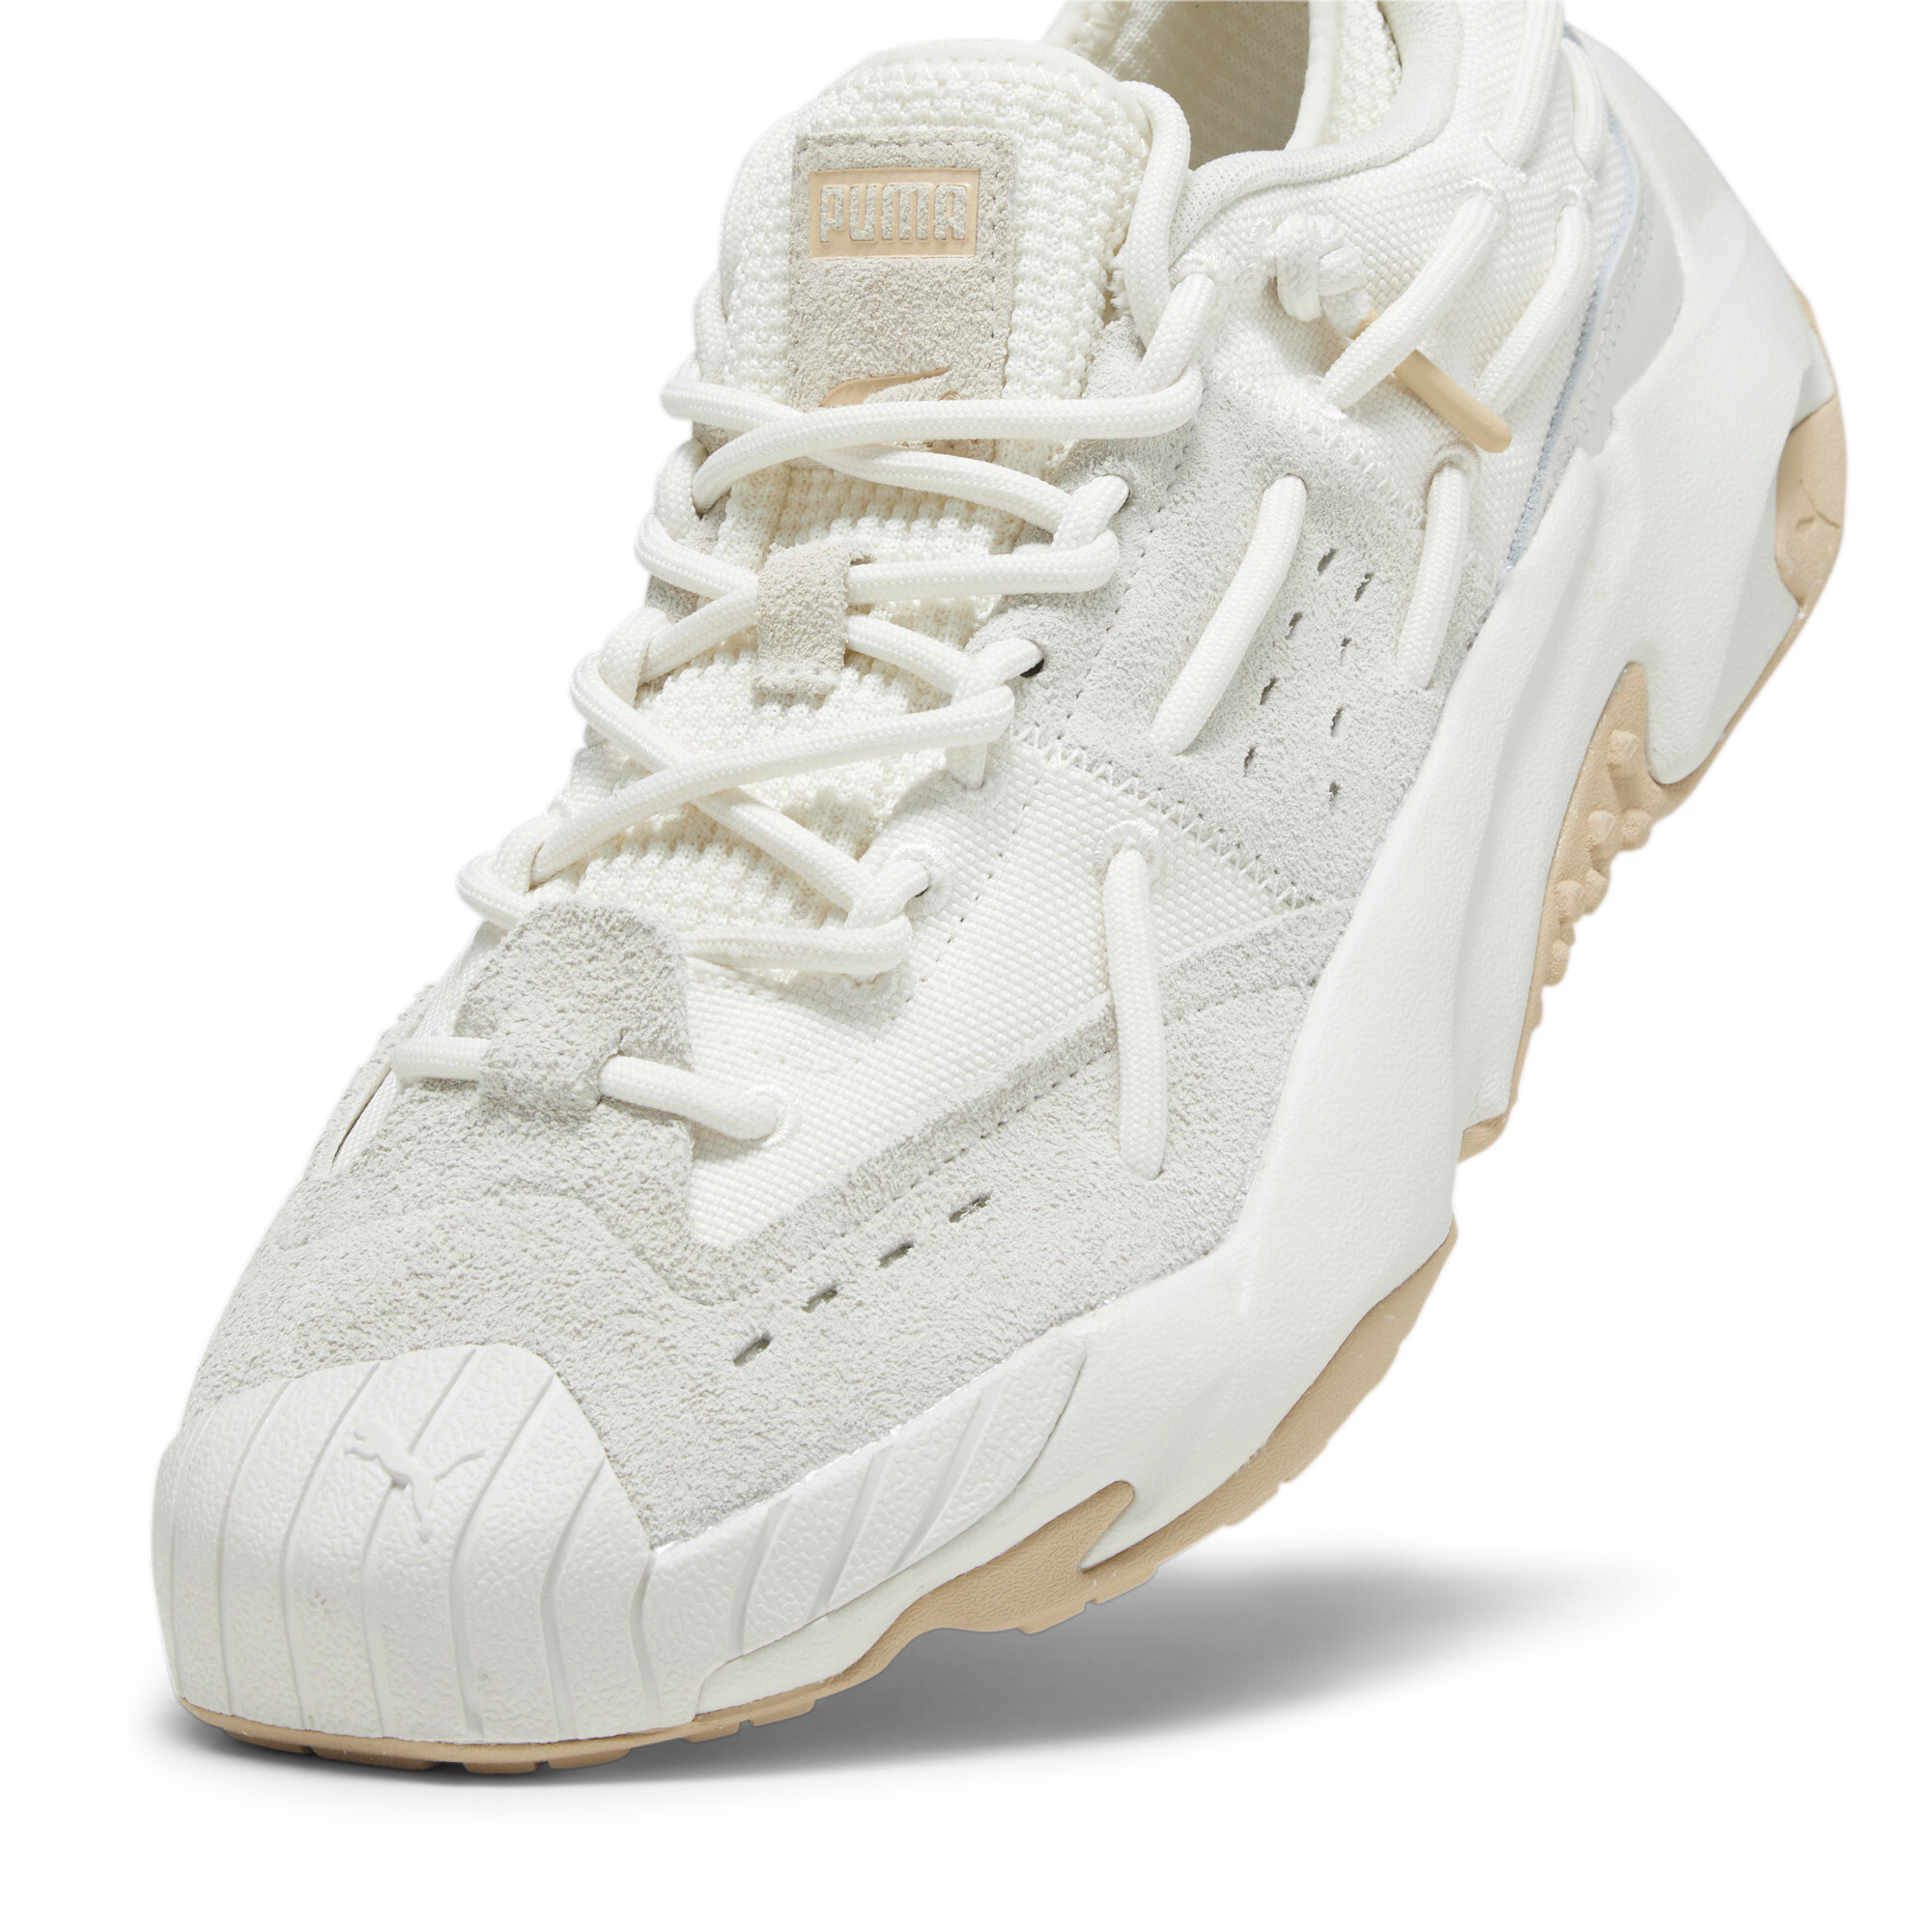 Men's PUMA Plexus Sand Sneakers In White, Size EU 38.5